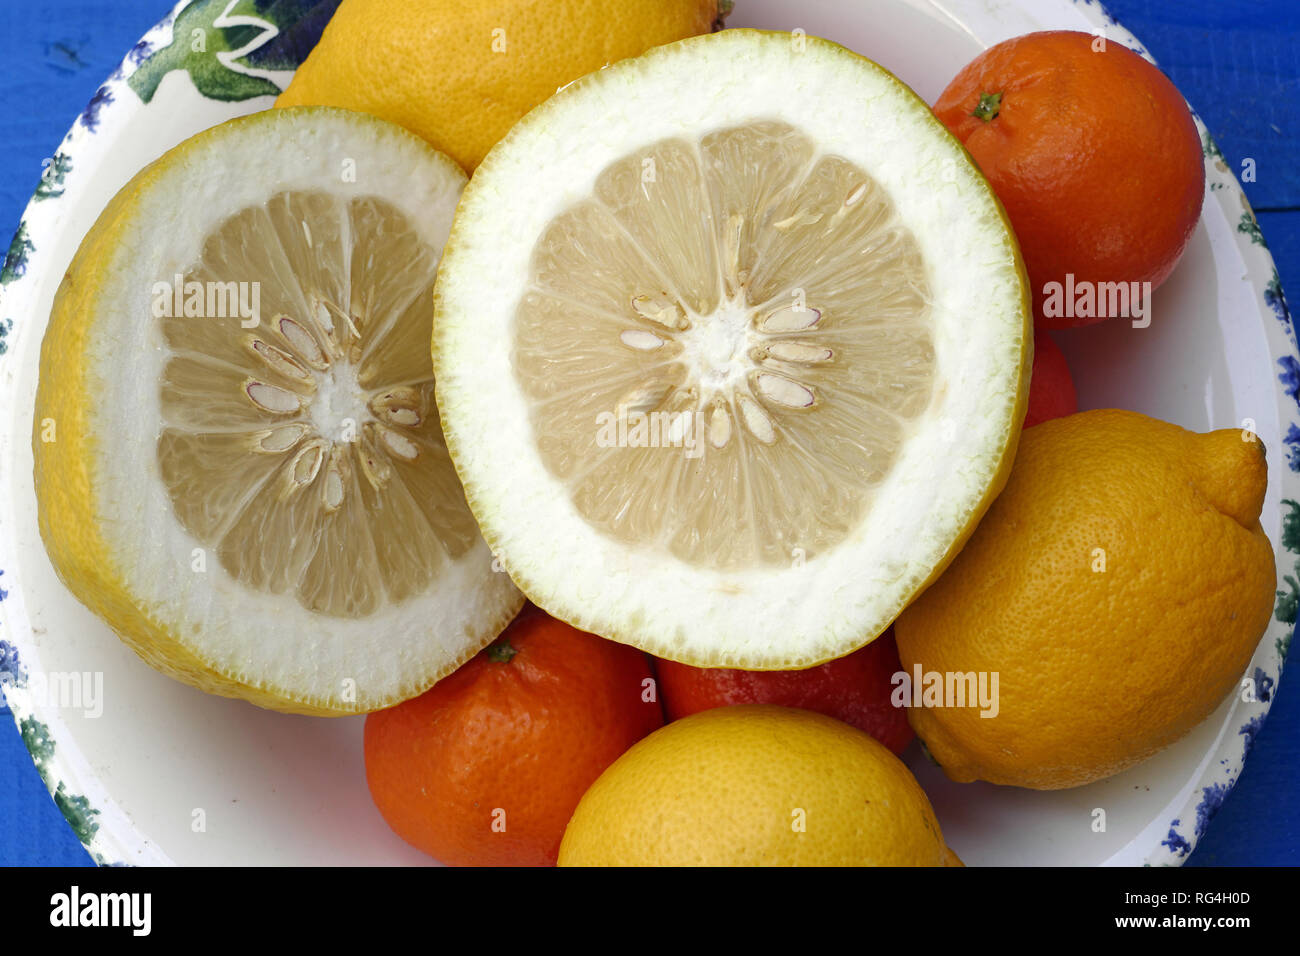 Cedrat, lemon and mandarine in studio Stock Photo